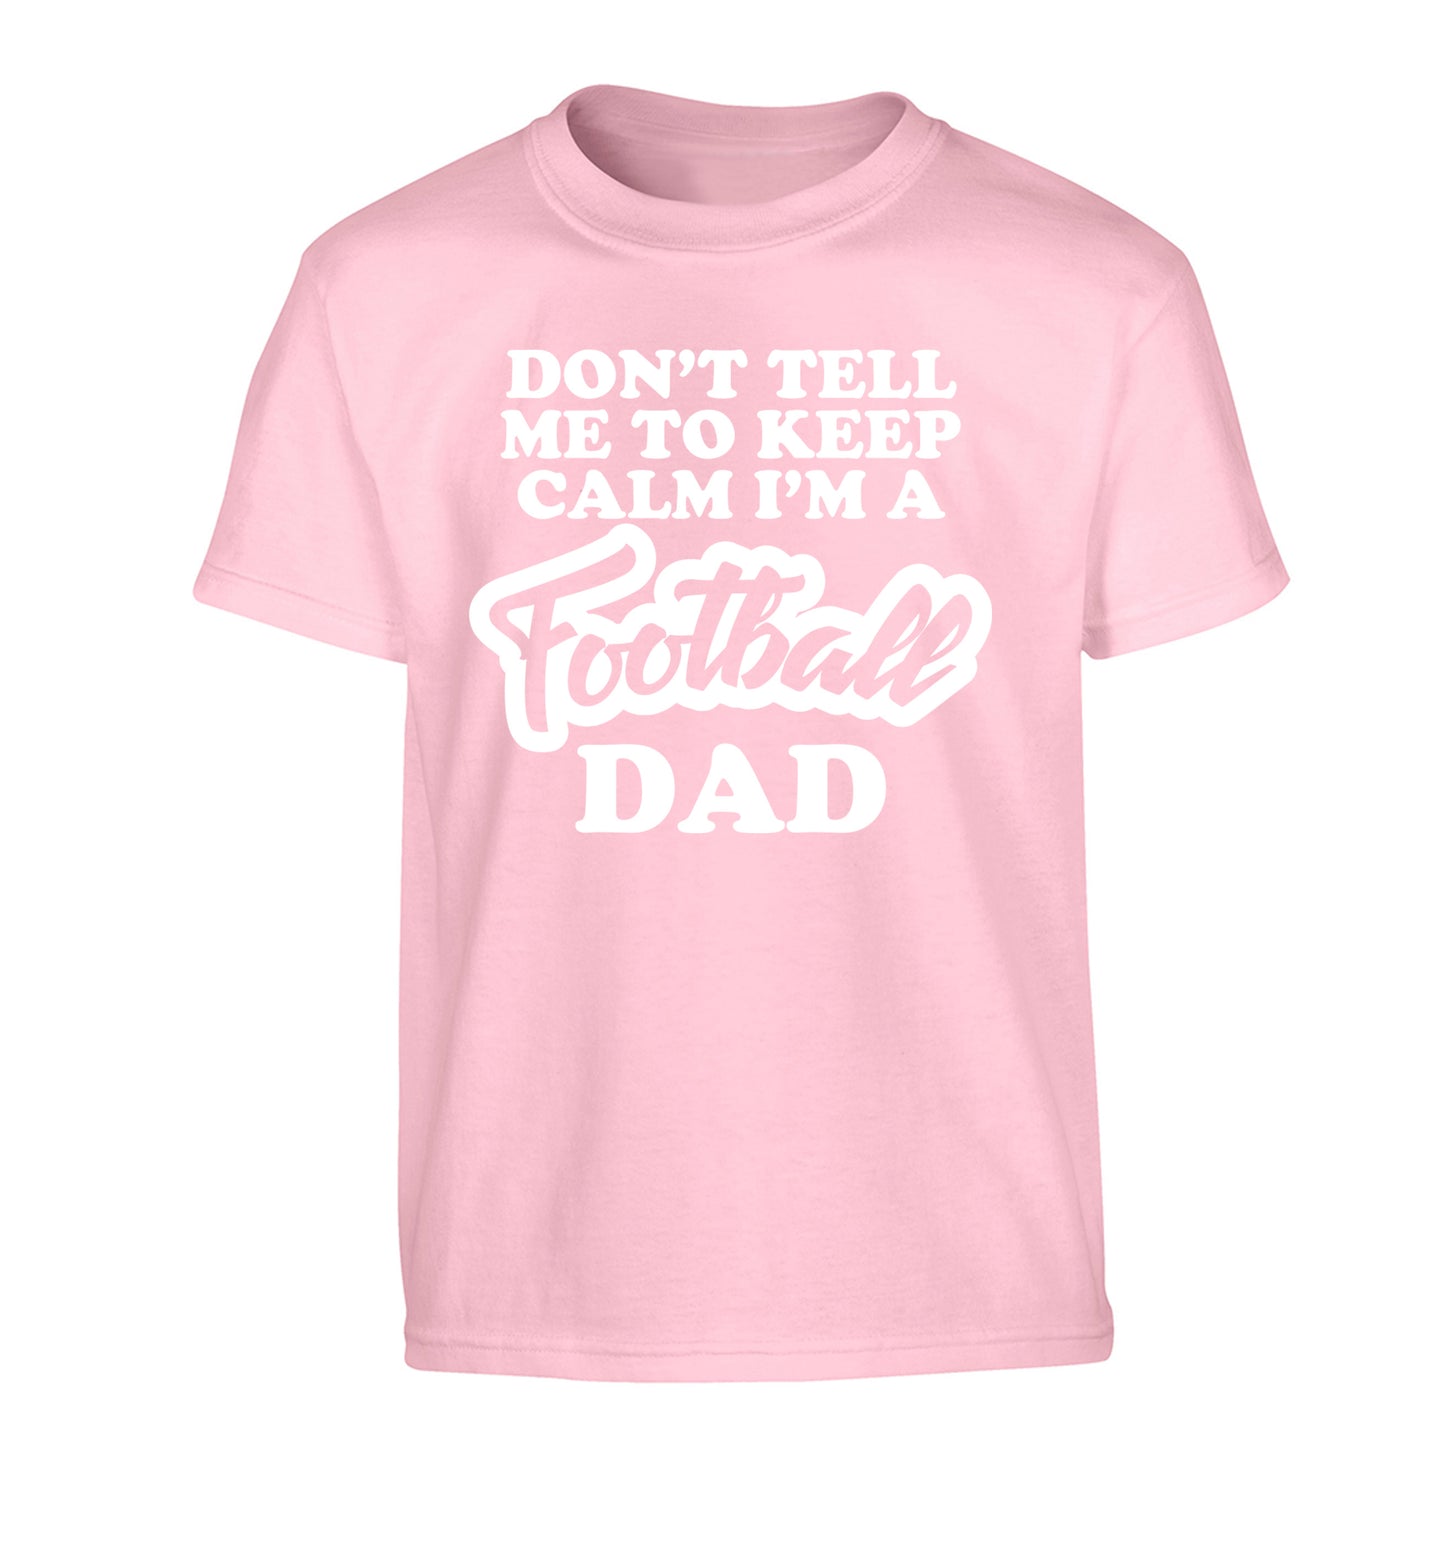 Don't tell me to keep calm I'm a football grandad Children's light pink Tshirt 12-14 Years